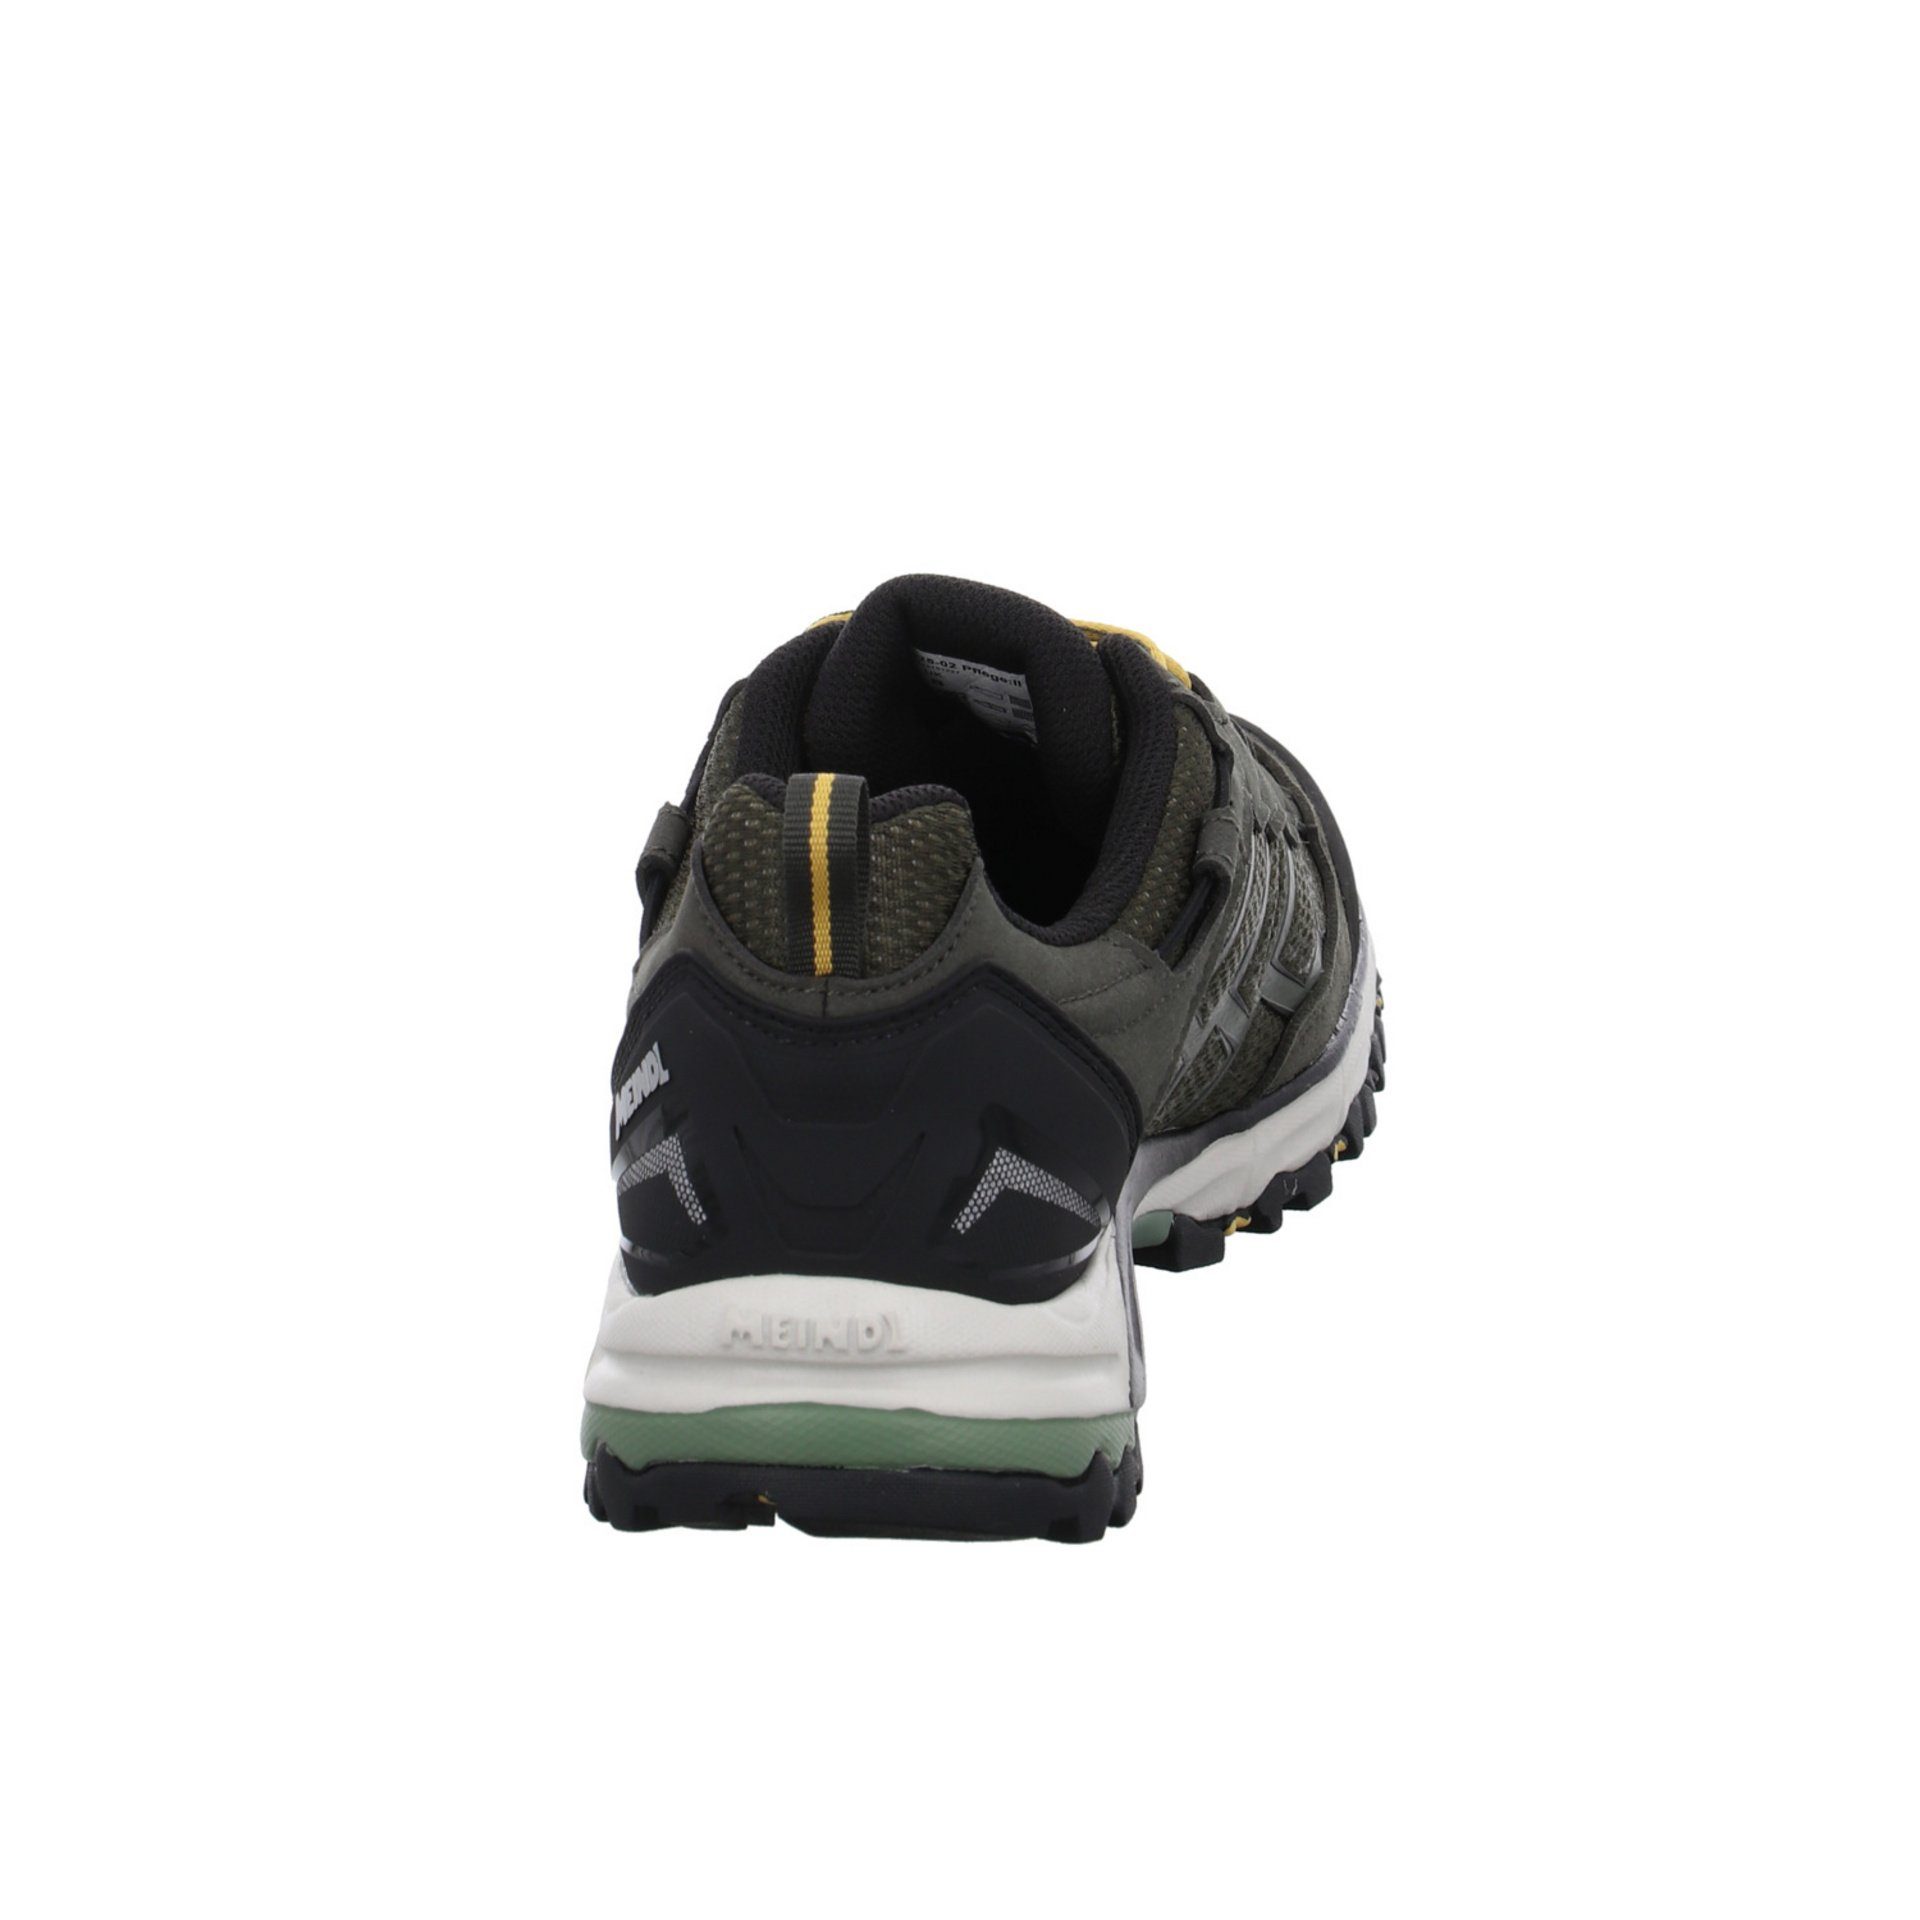 Meindl Herren GTX grün Caribe Outdoor Schuhe Outdoorschuh Outdoorschuh Synthetikkombination